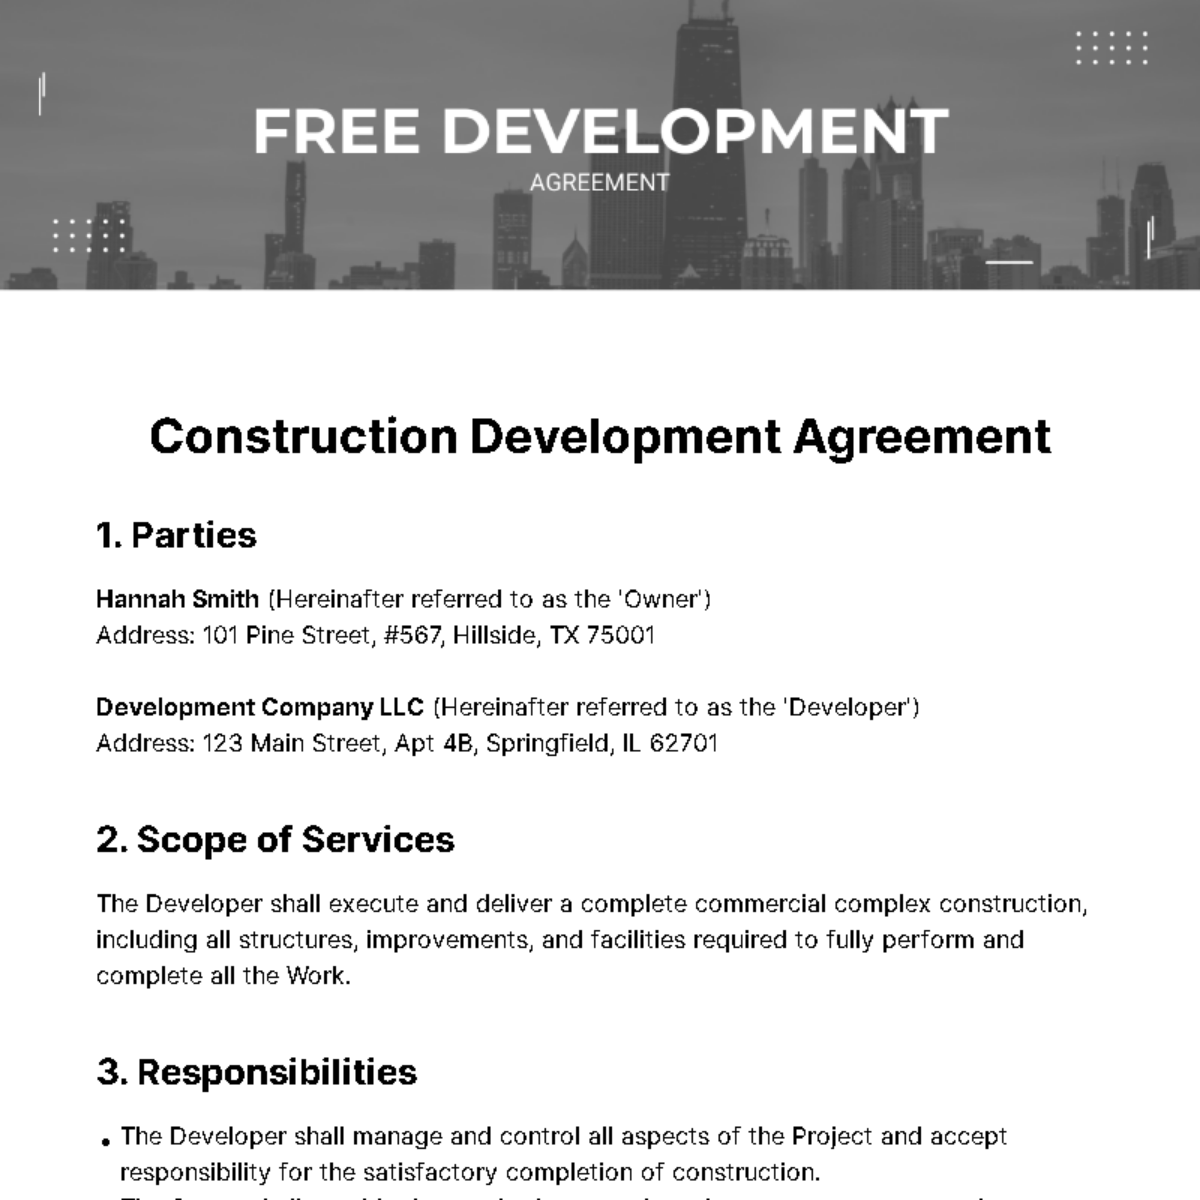 Free Development Agreement Template